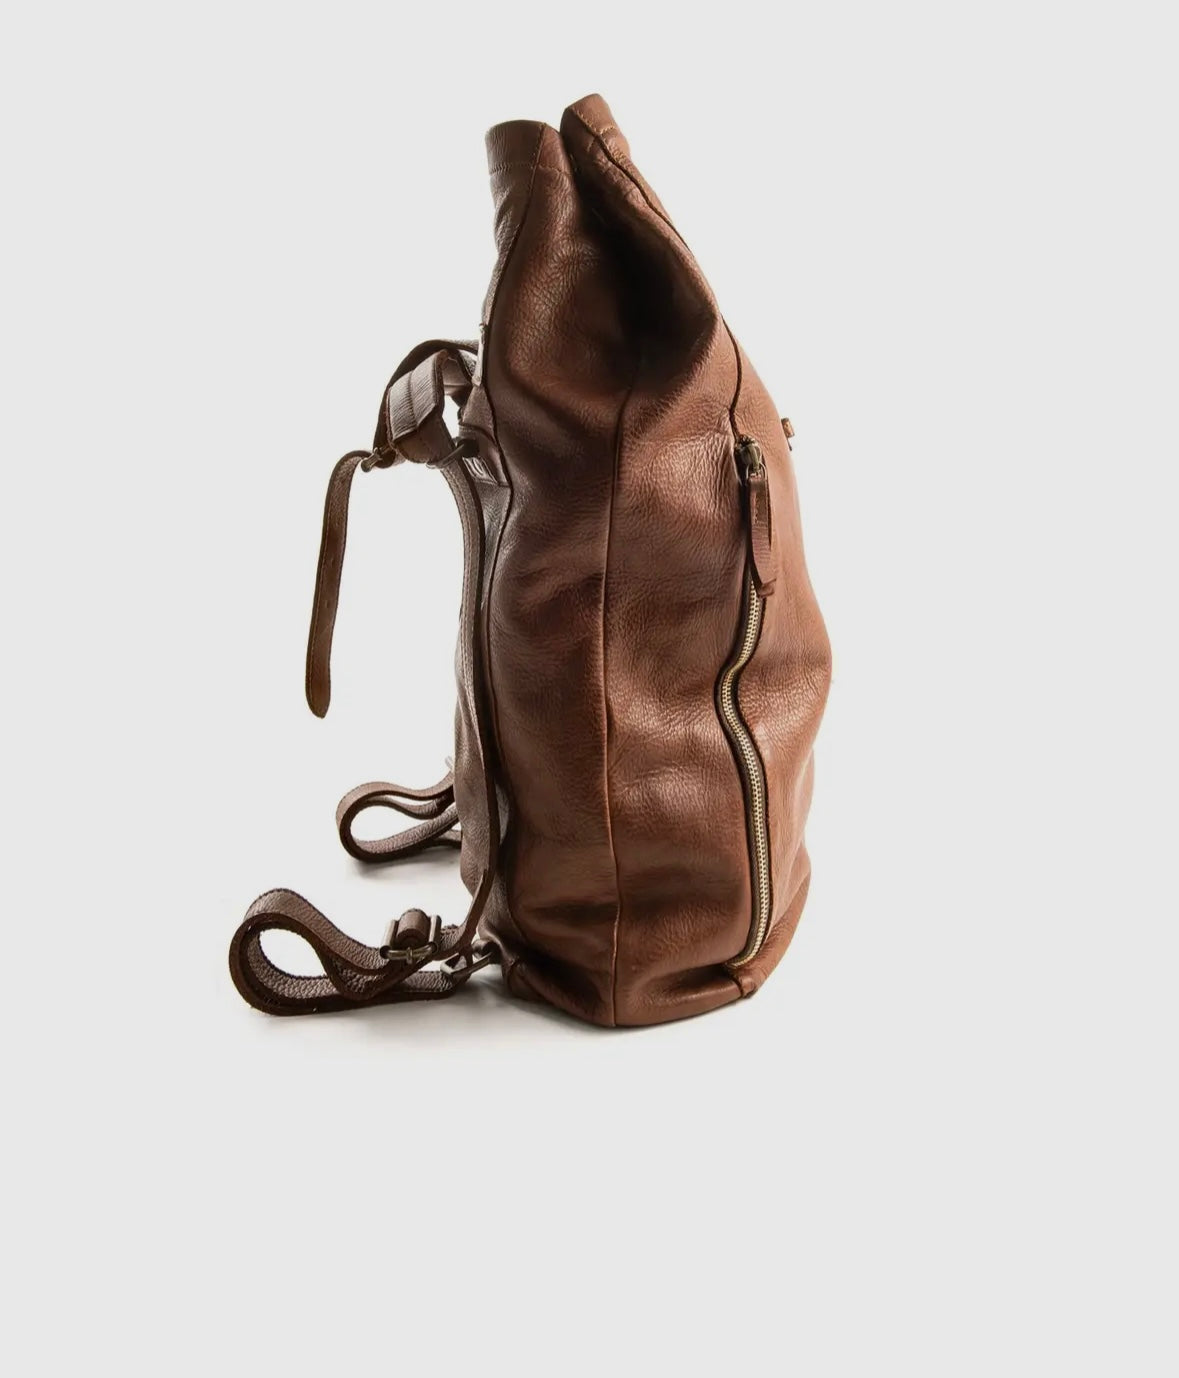 Harolds rollover backpack